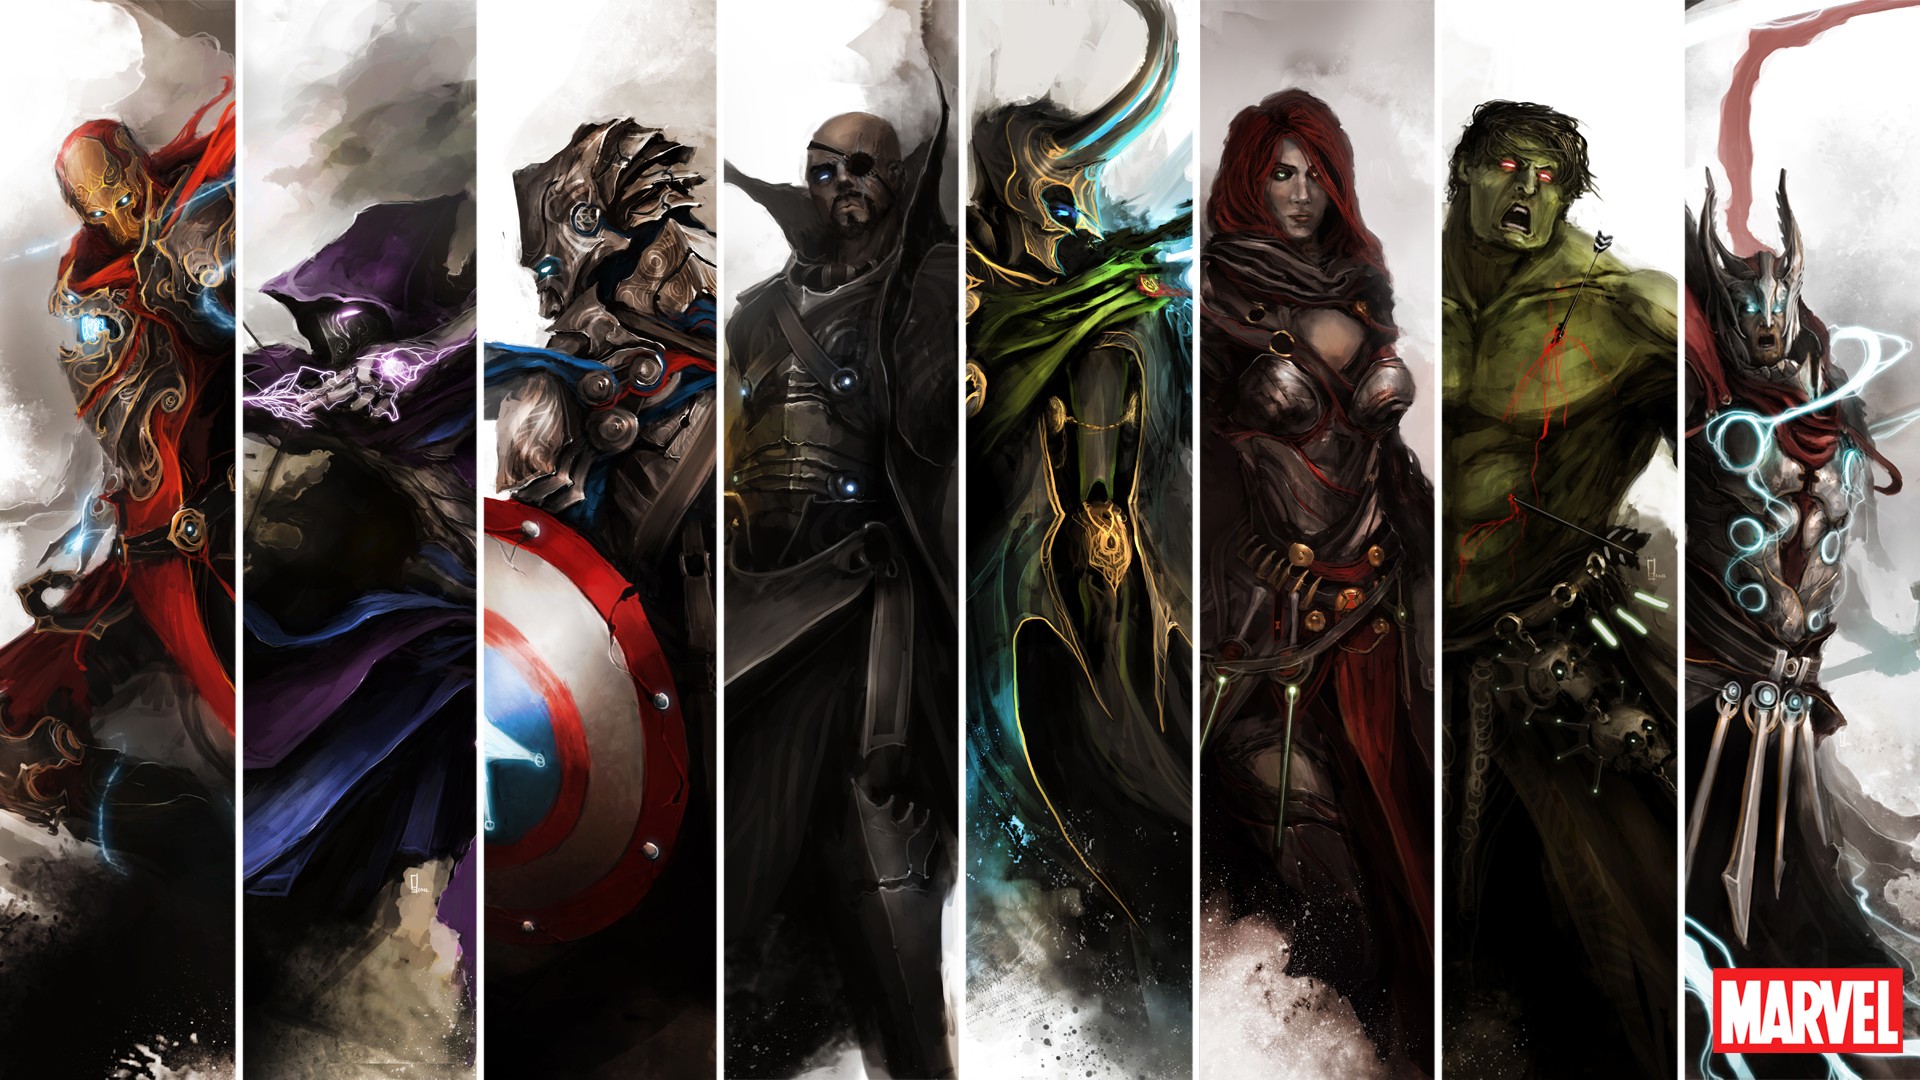 Arrow, Comics, Heroes, Medieval, Artwork, The Avengers, Iron Man